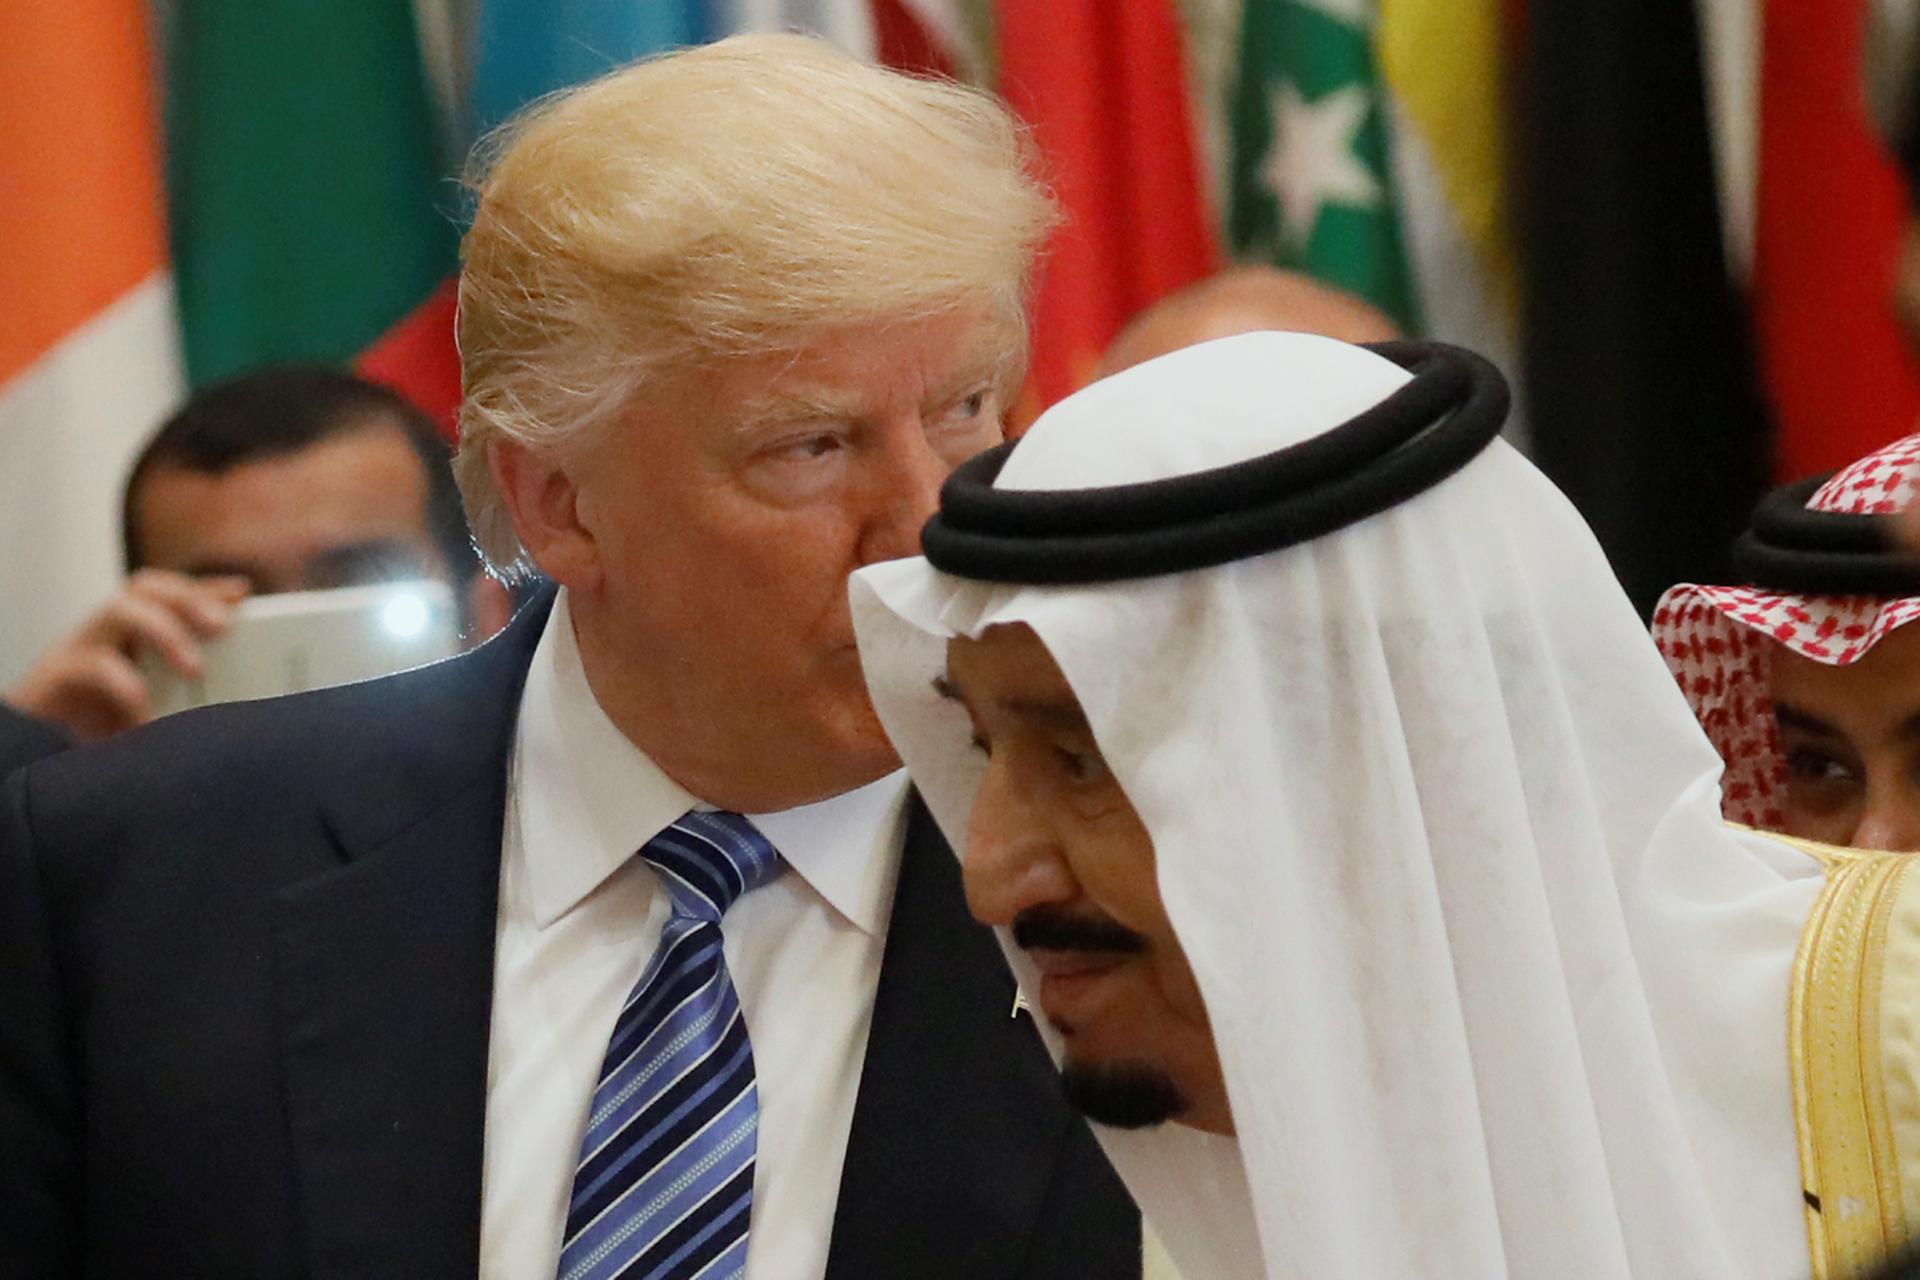 US President Donald Trump and Saudi Arabia's King Salman bin Abdulaziz Al Saud